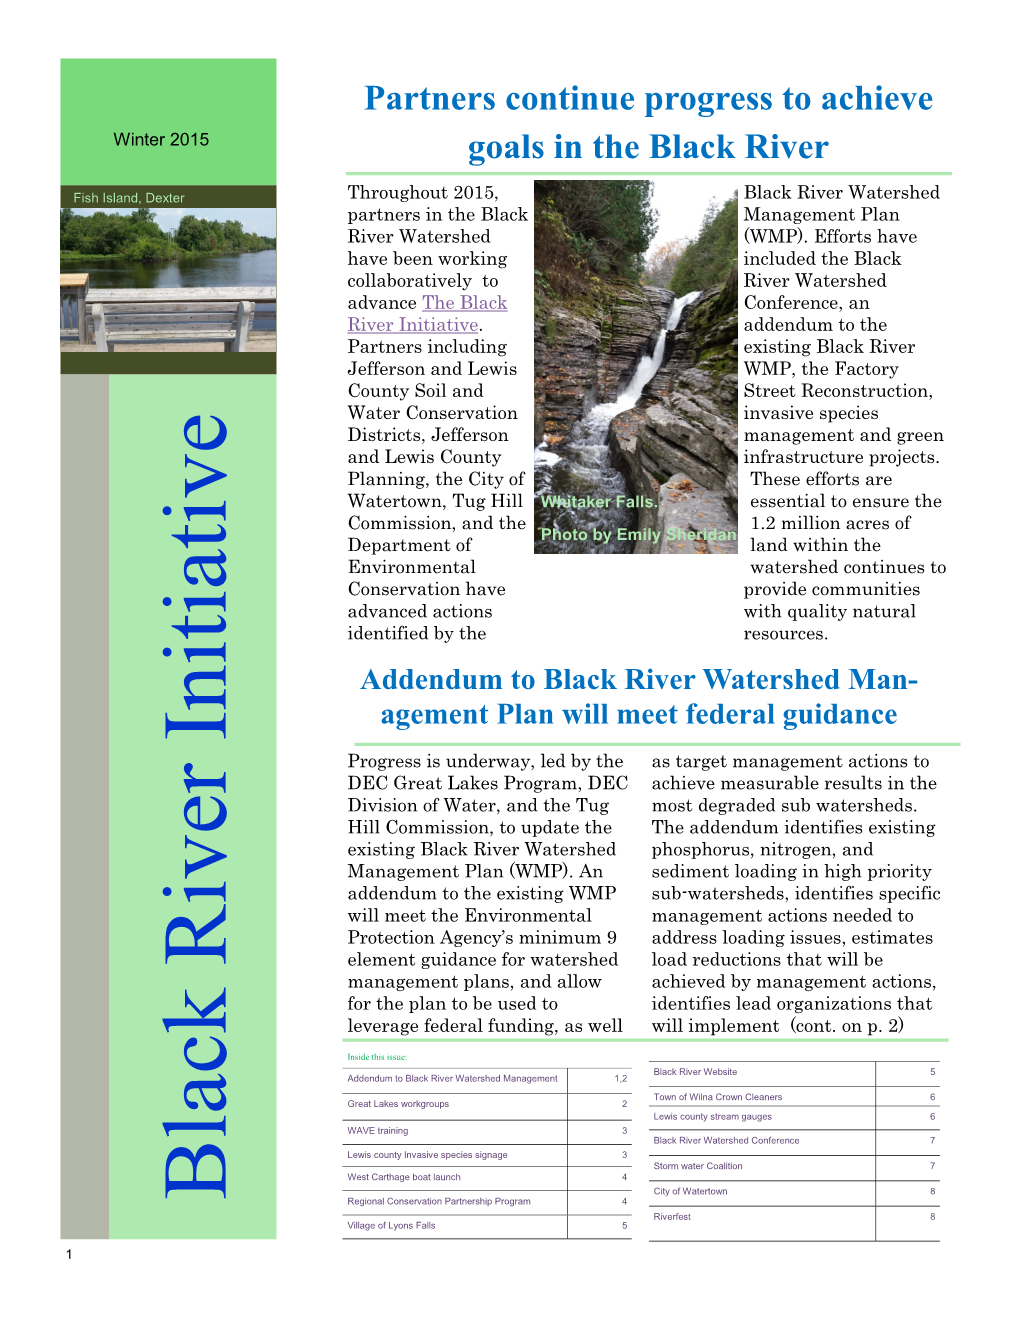 Black River Initiative River Black Regional Conservation Partnership Program 4 Riverfest 8 Village of Lyons Falls 5